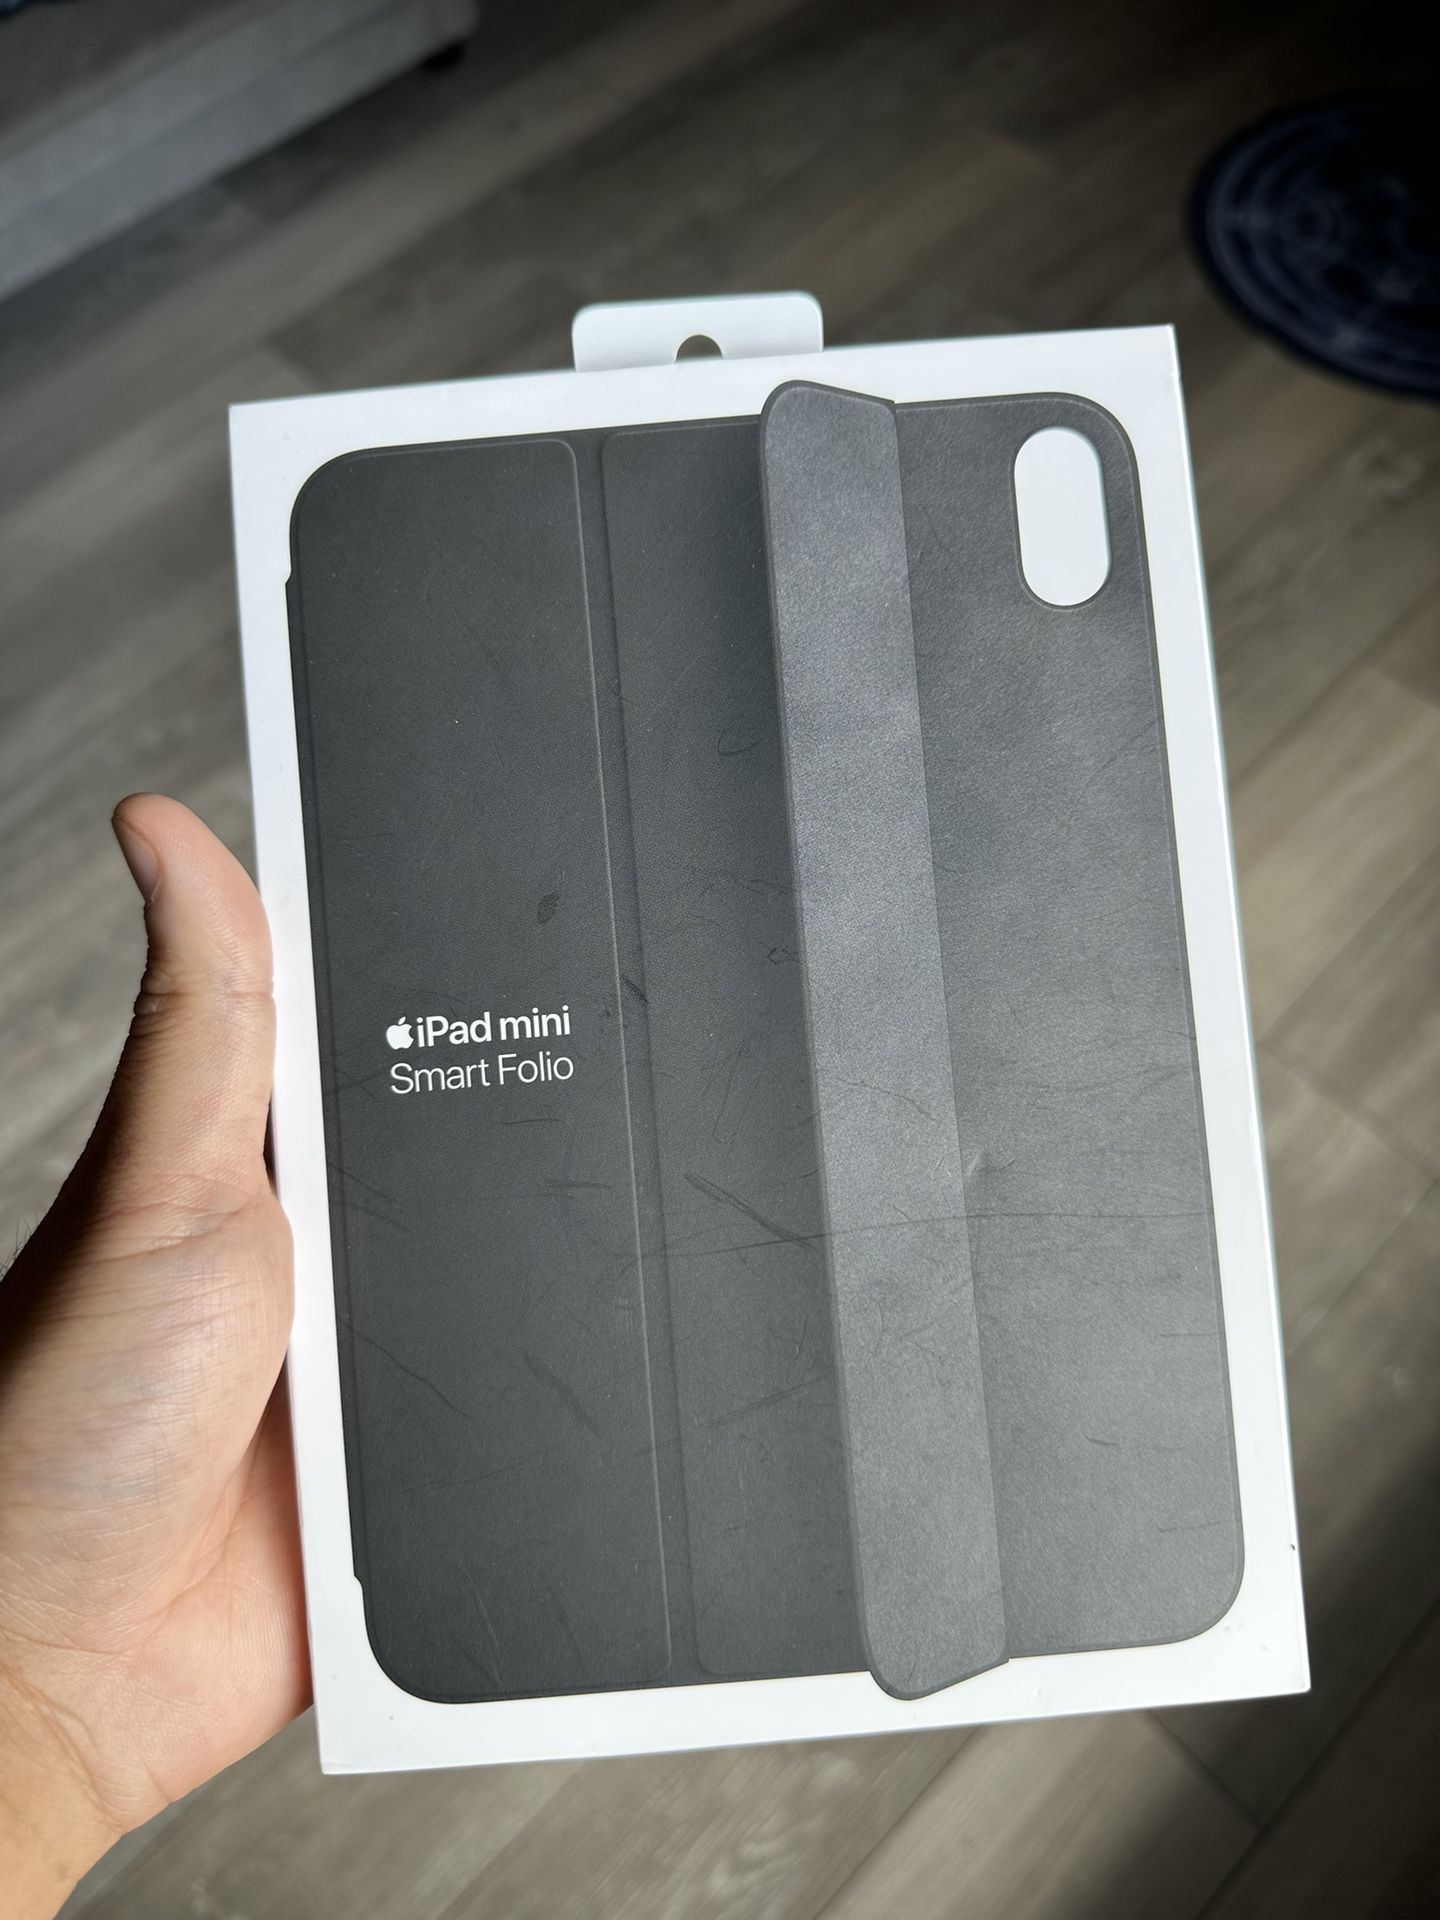 IPad Mini 6 Generation Apple Smart Folio Case for Sale in Spanaway, WA -  OfferUp